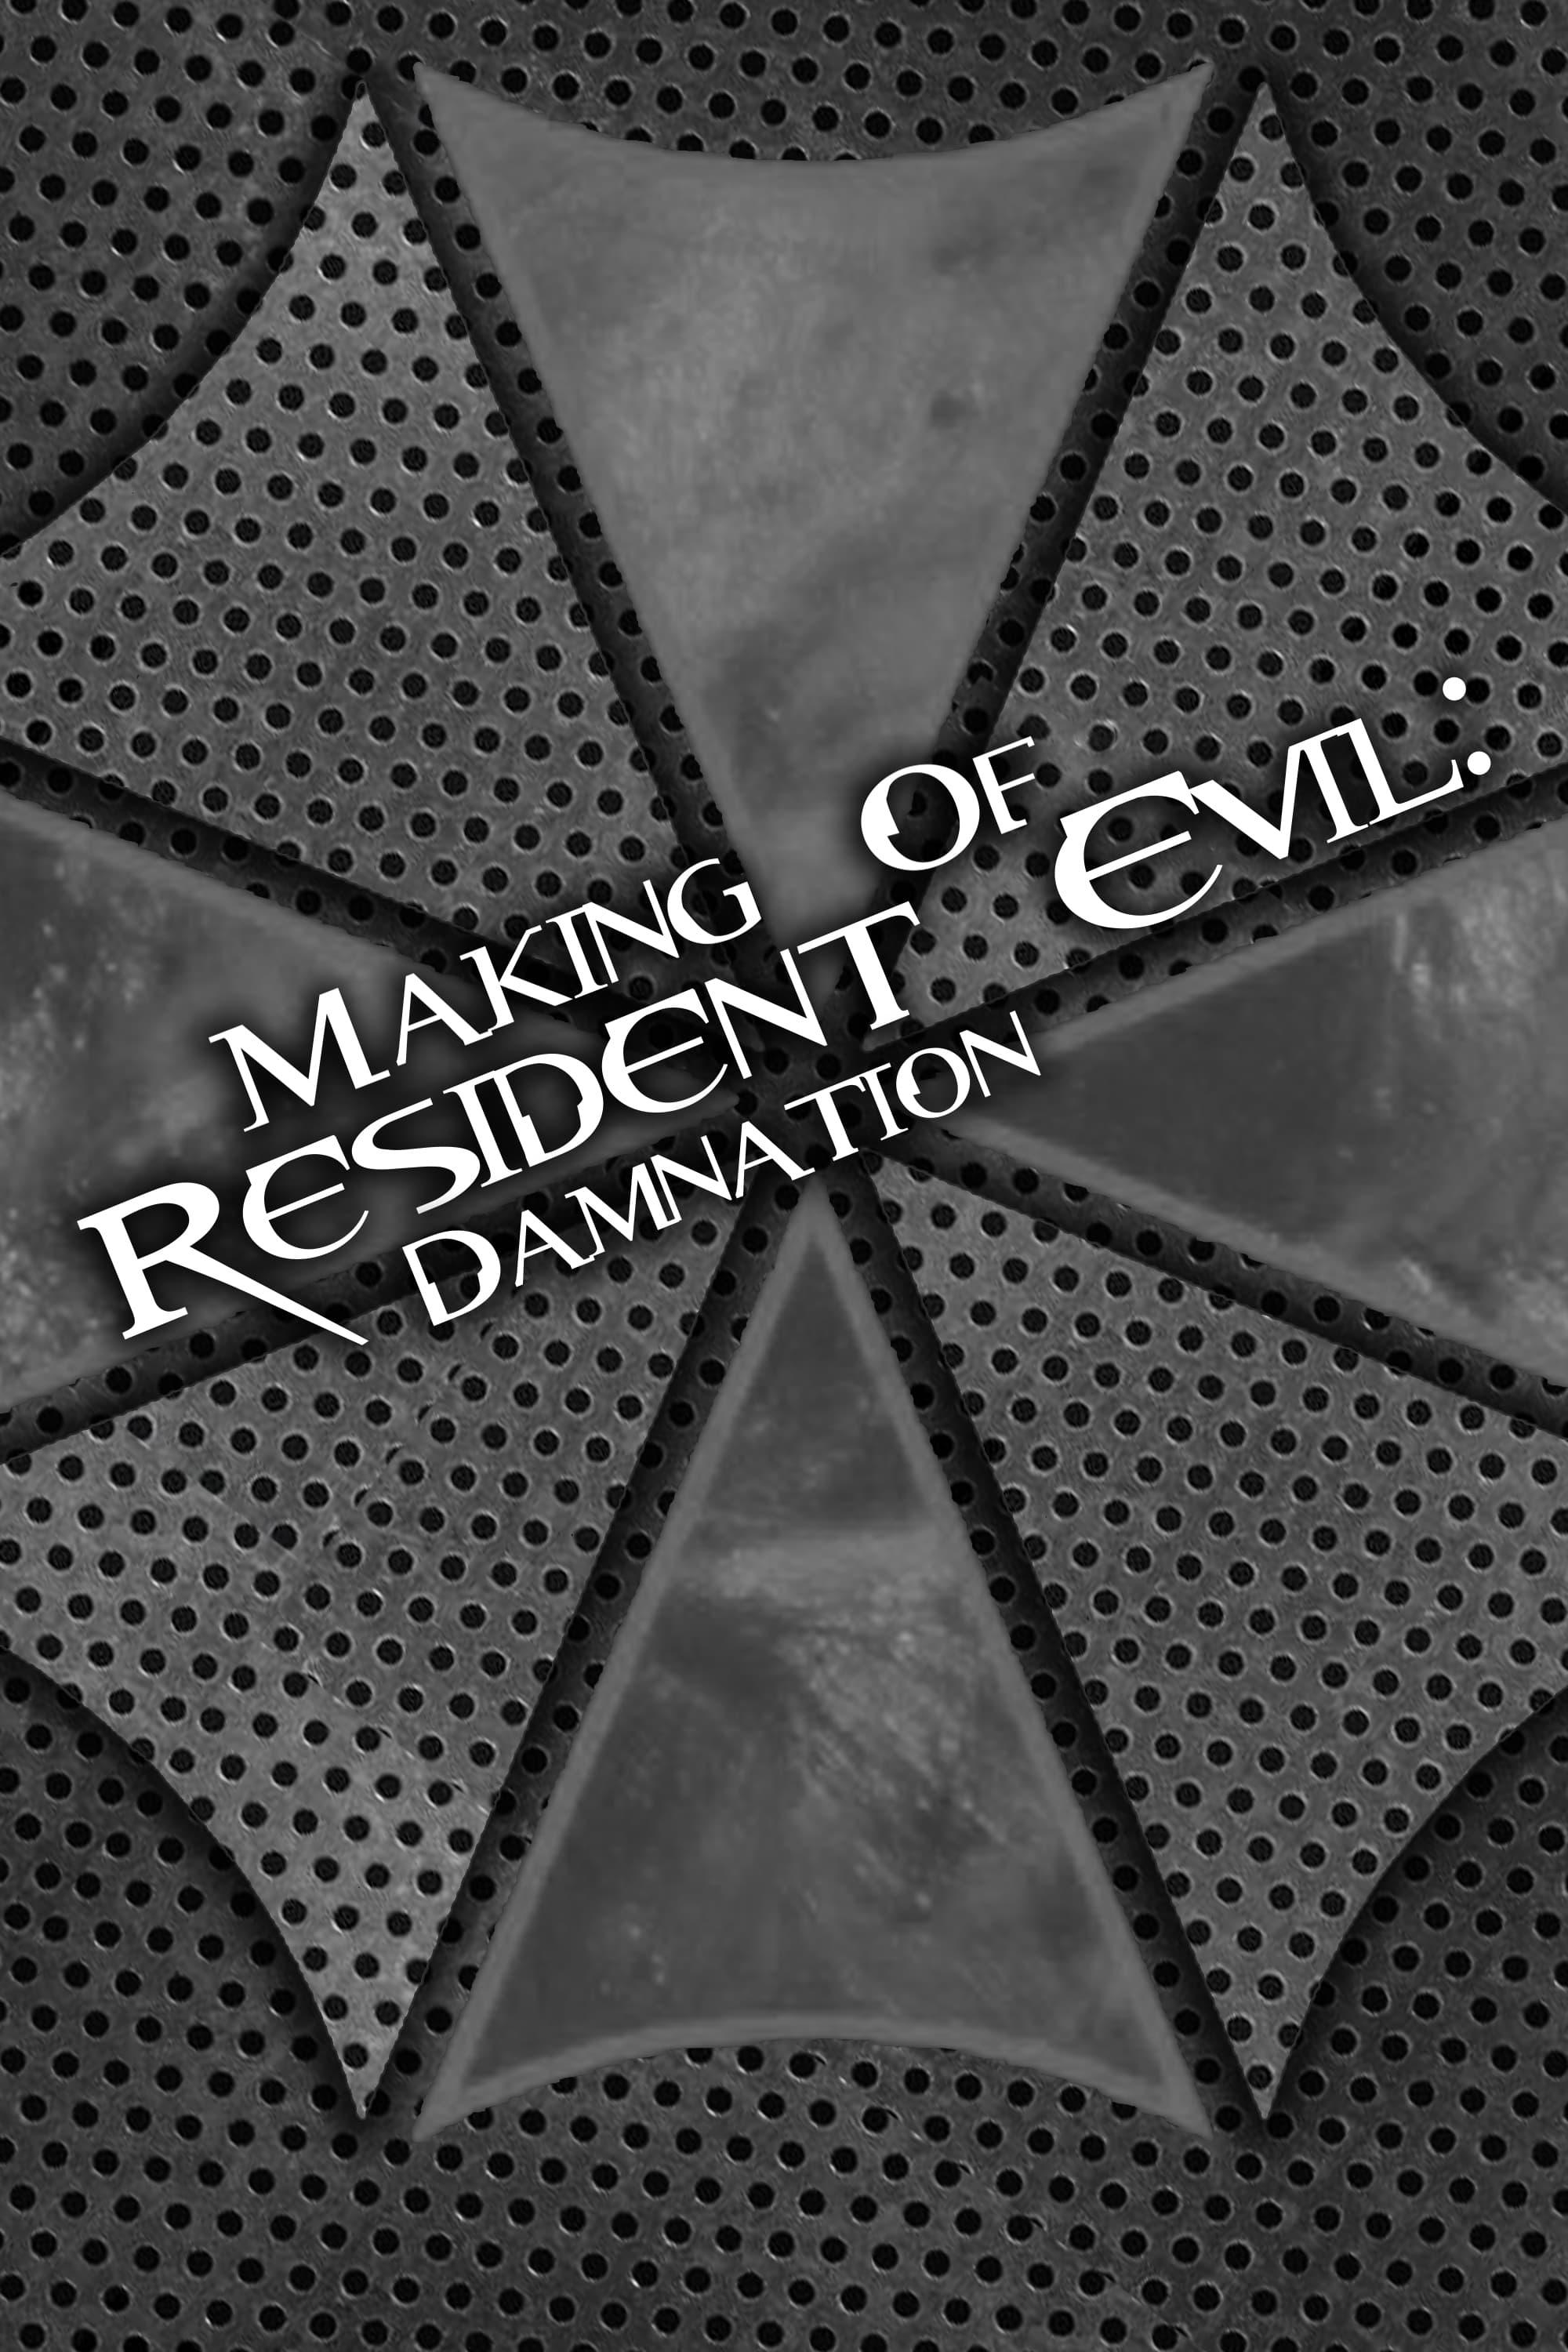 Resident Evil Damnation: The DNA of Damnation poster